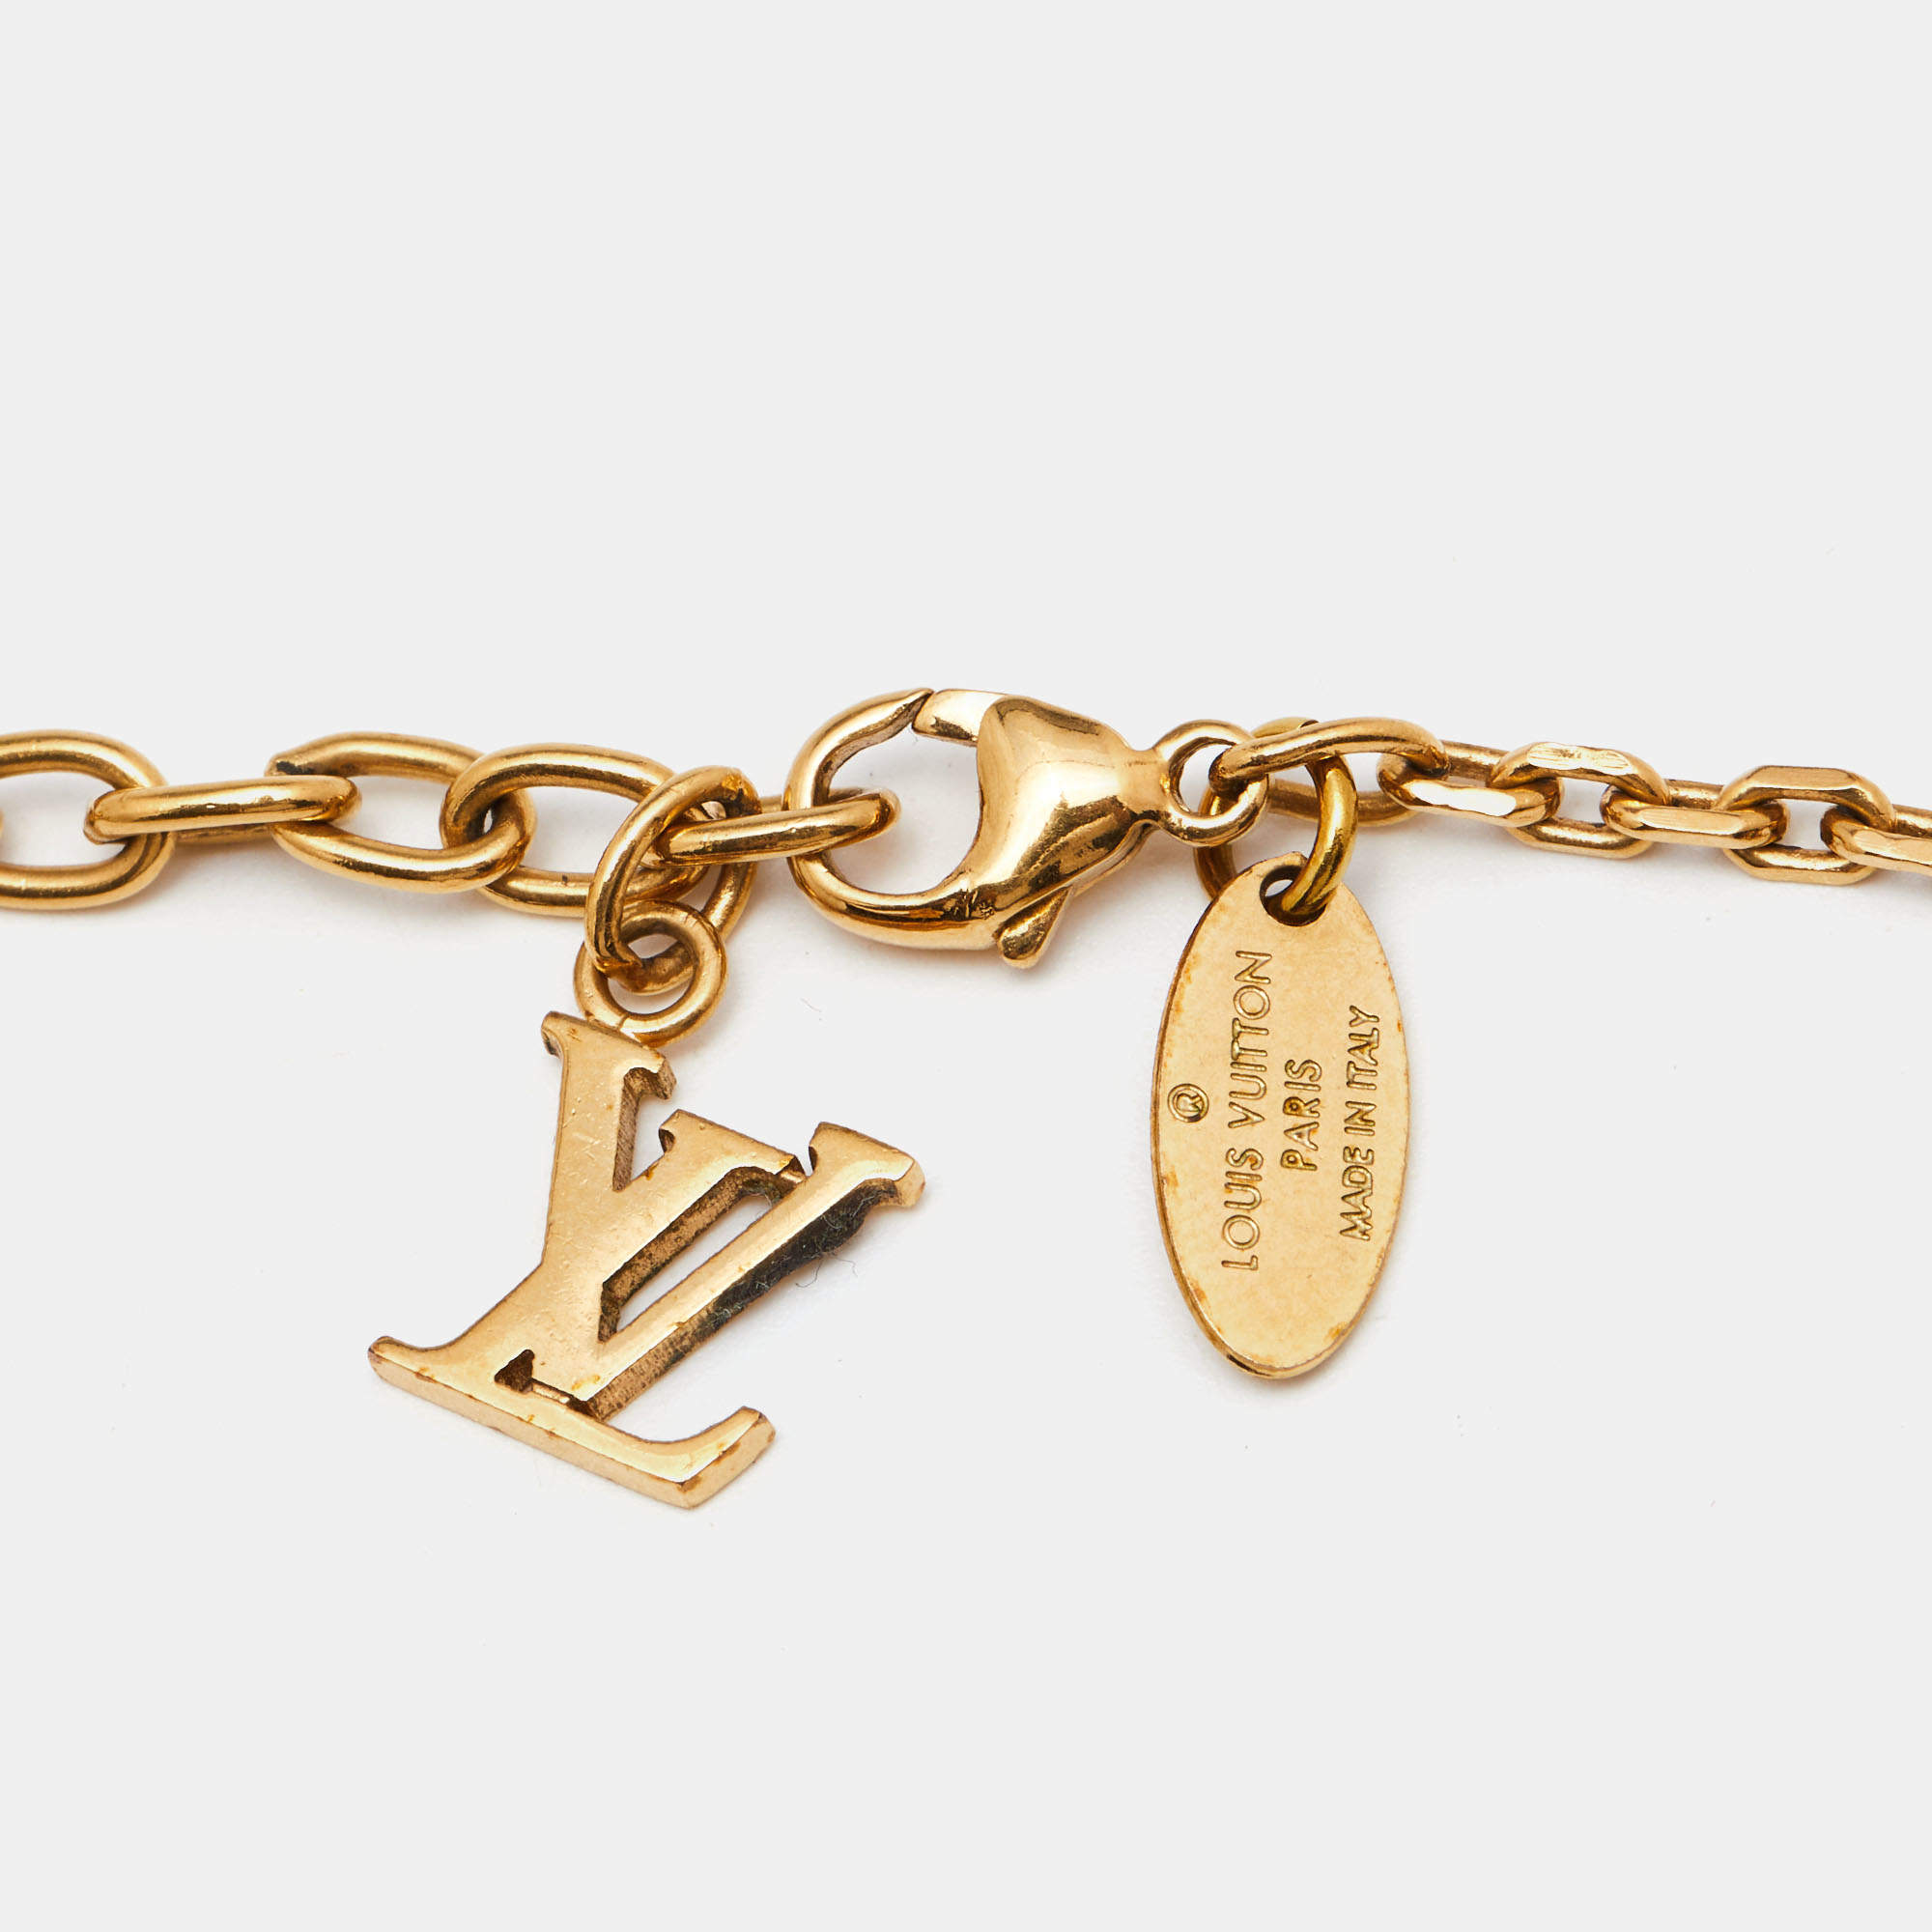 Louis Vuitton LV Monogram The Gamble Crystal Necklace